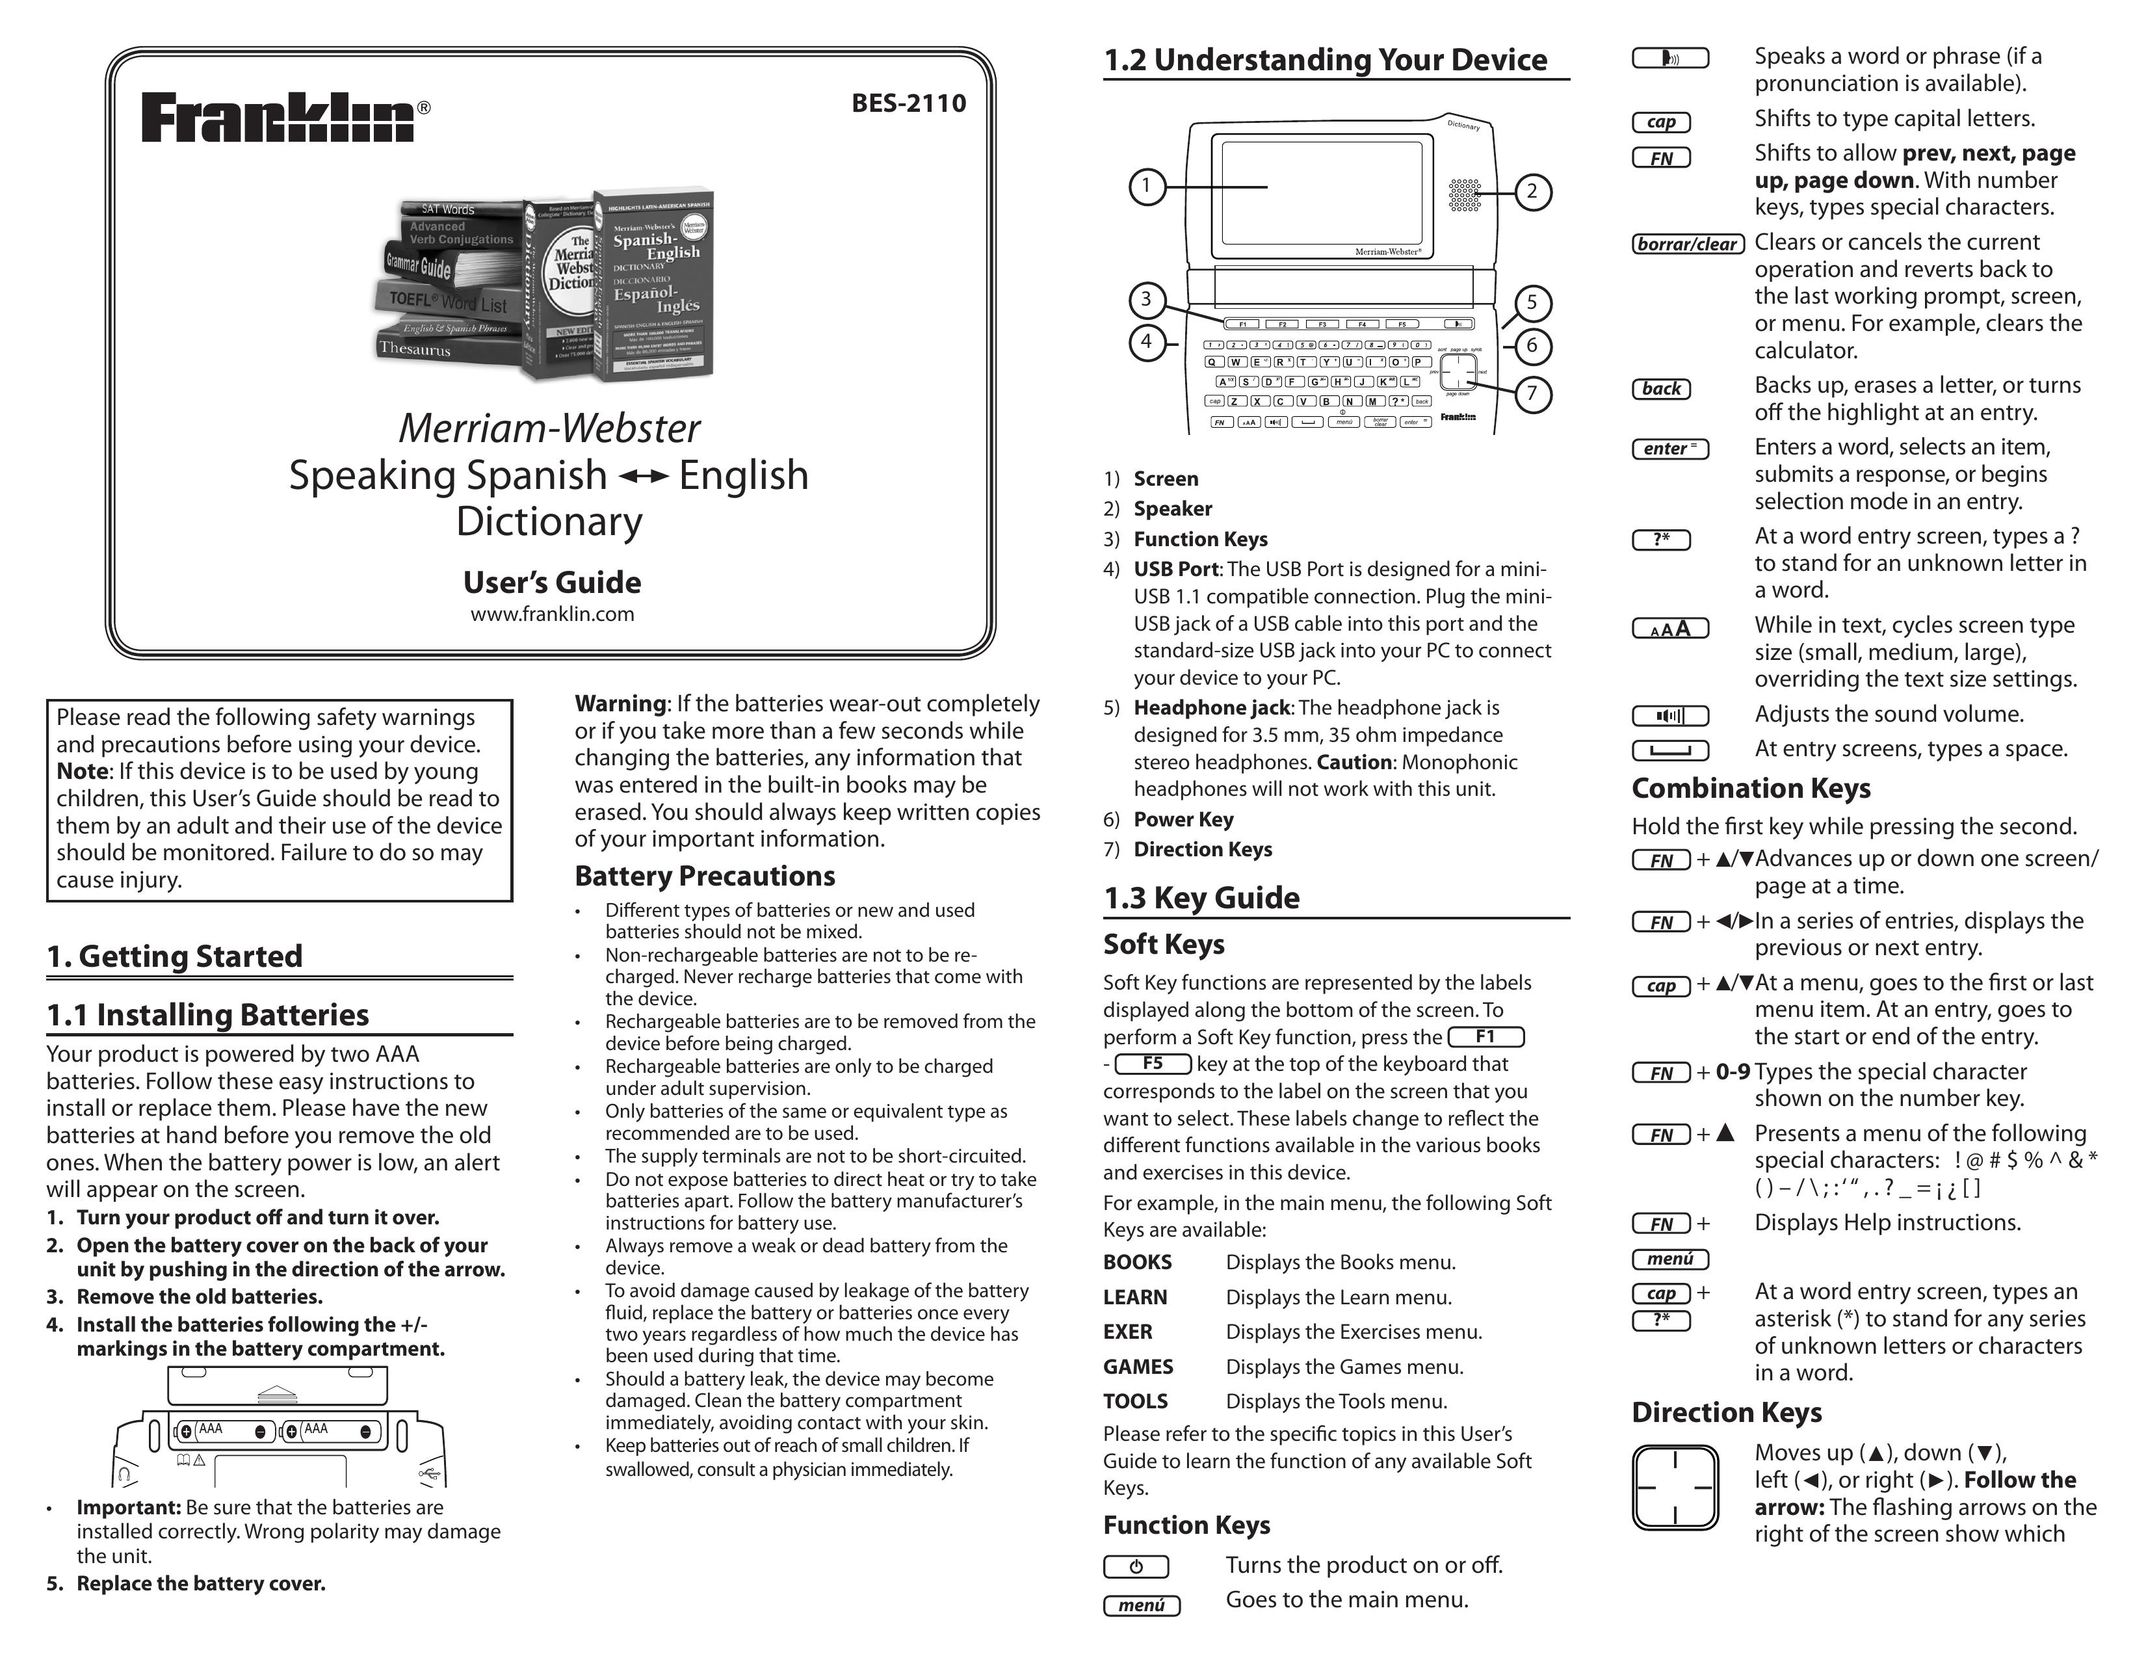 Franklin BES-2110 Handheld Game System User Manual (Page 1)